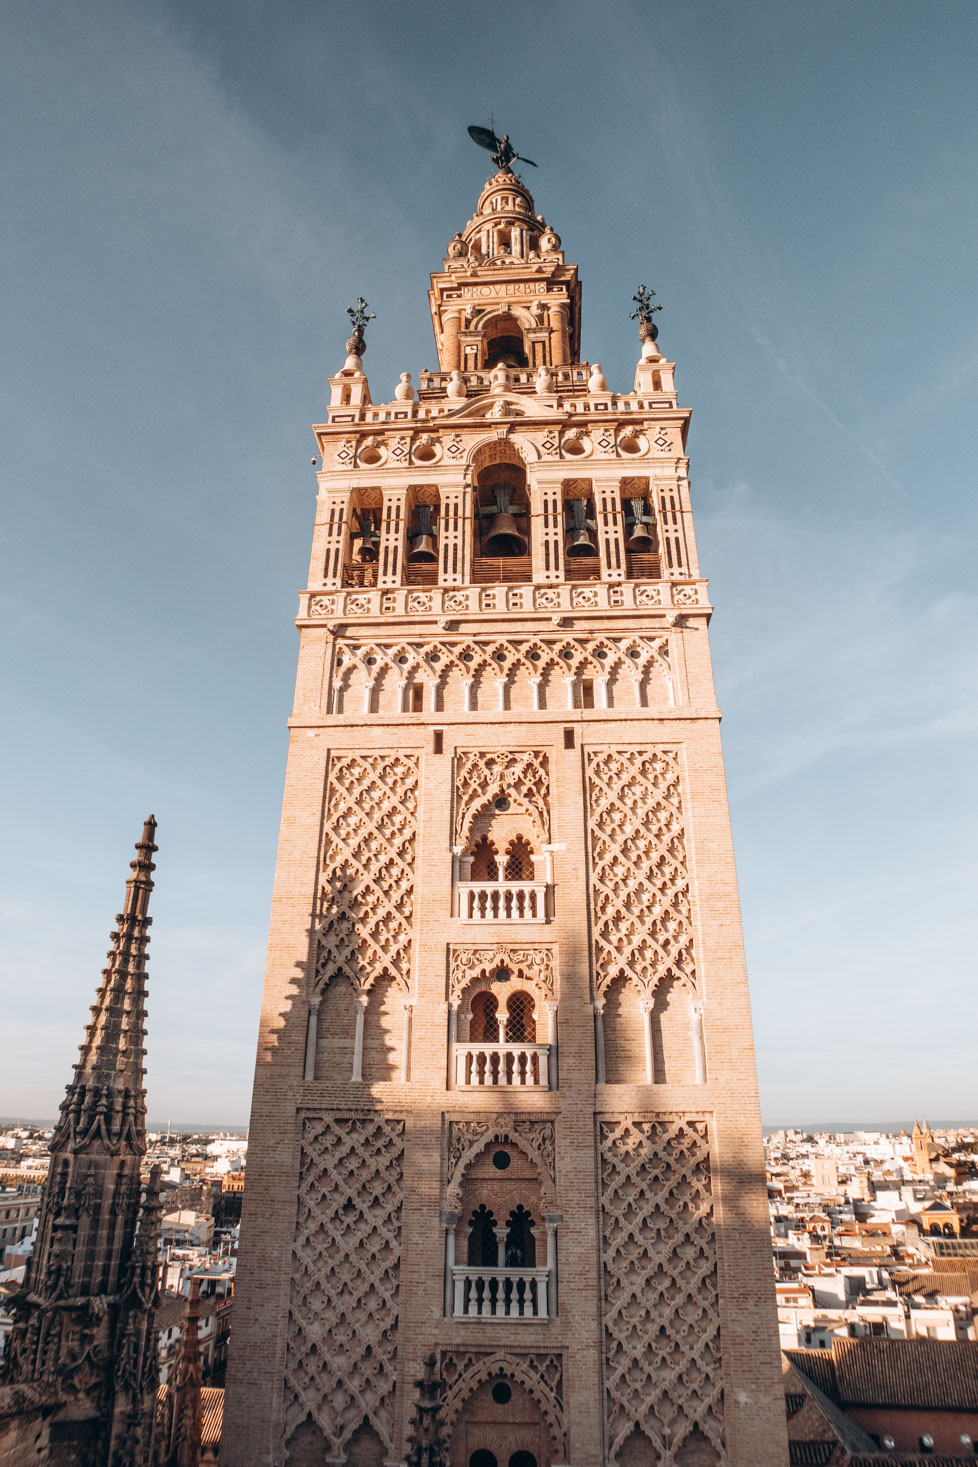 Giralda tower in Seville, Spain